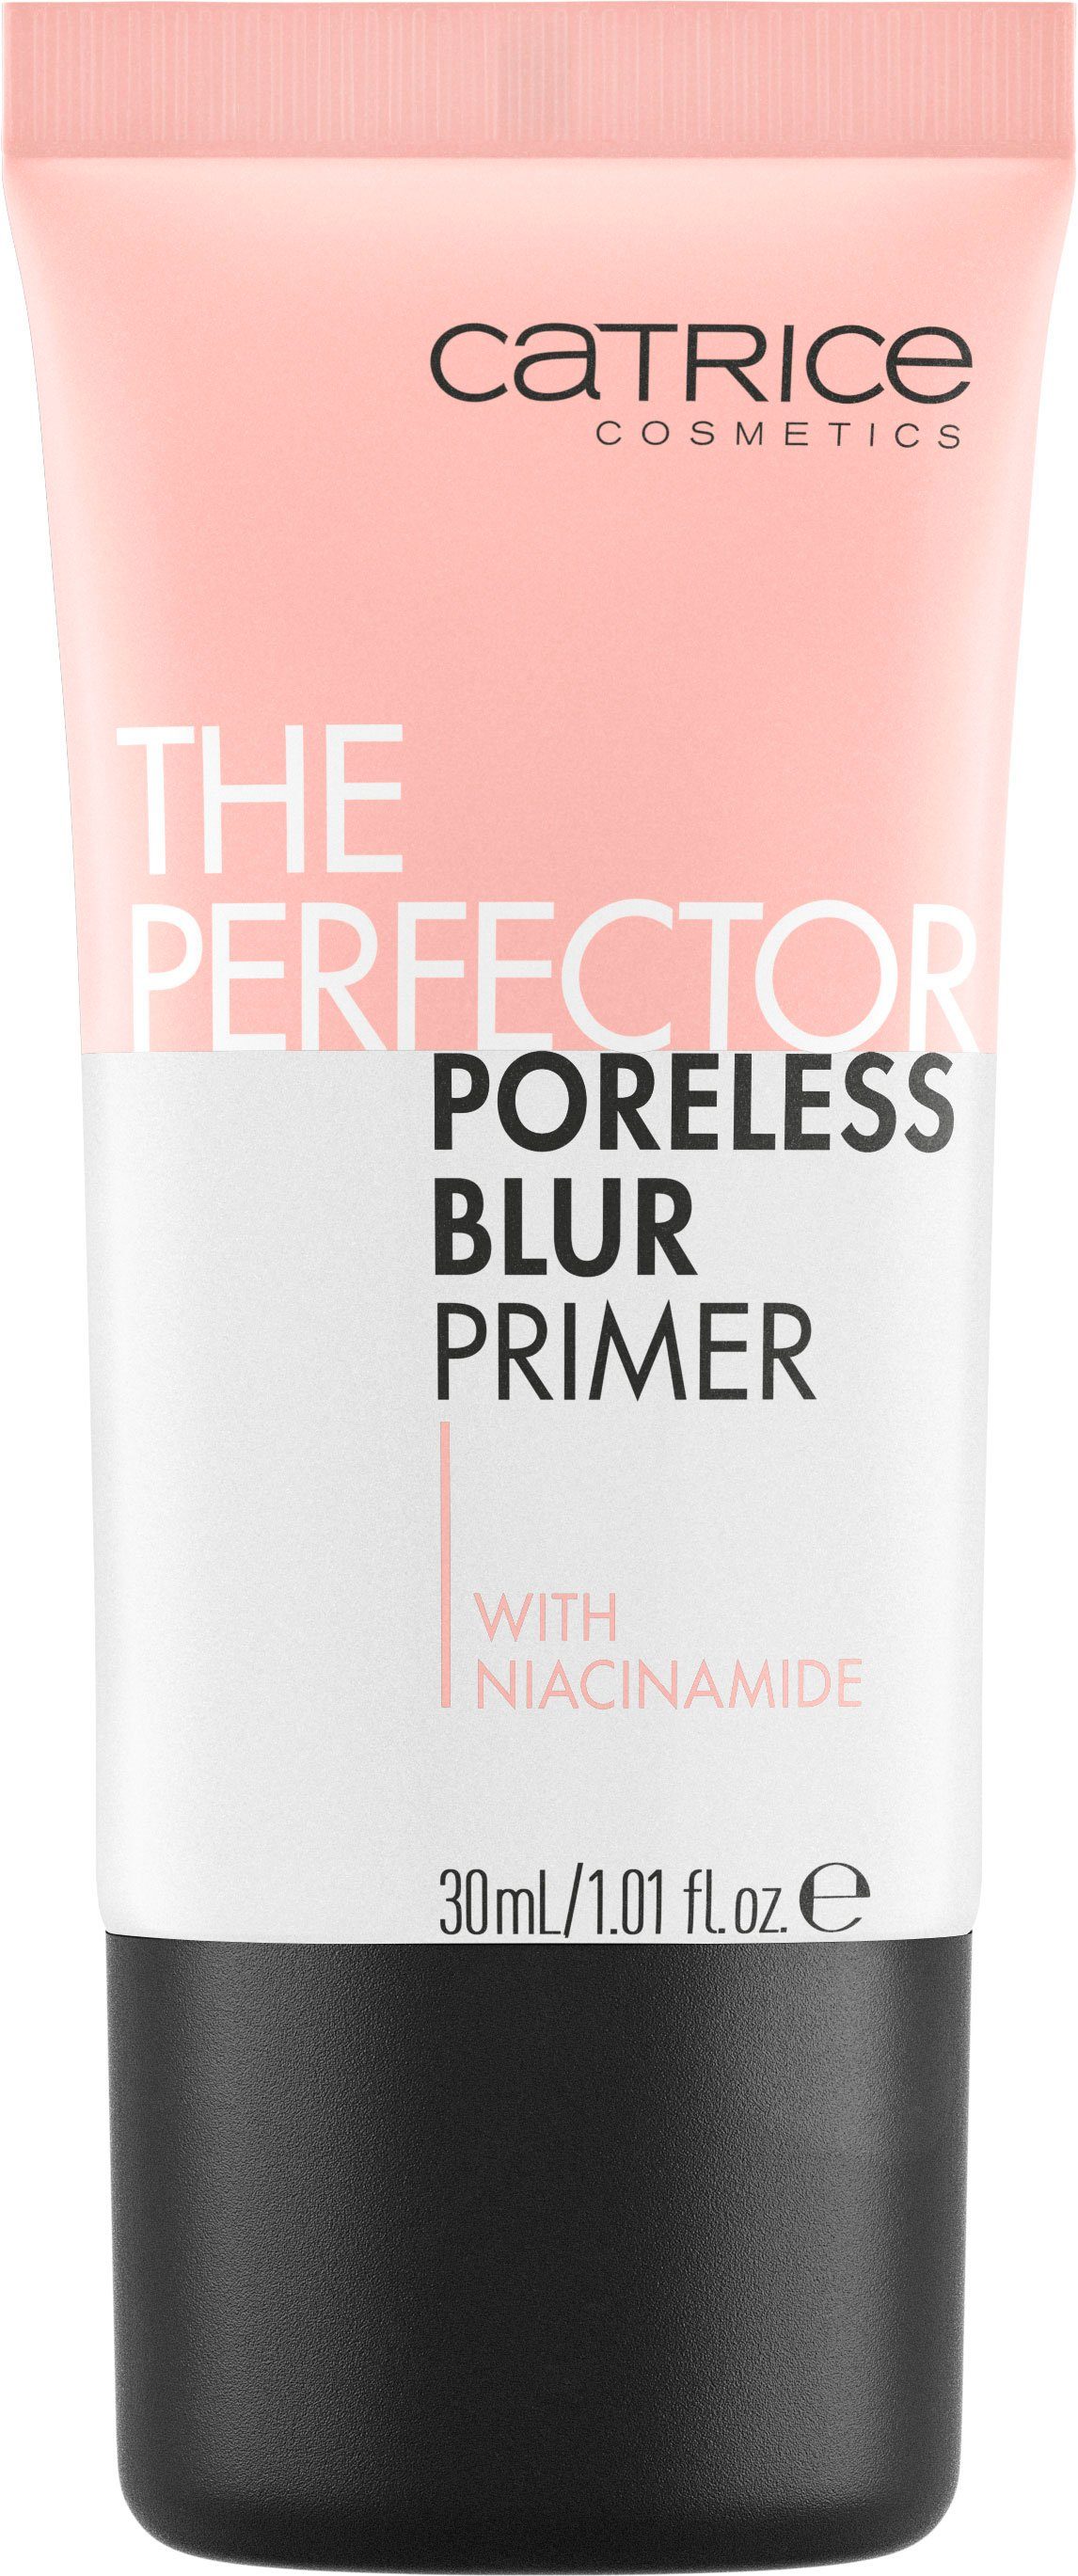 Catrice Primer The Perfector Poreless Blur Primer,